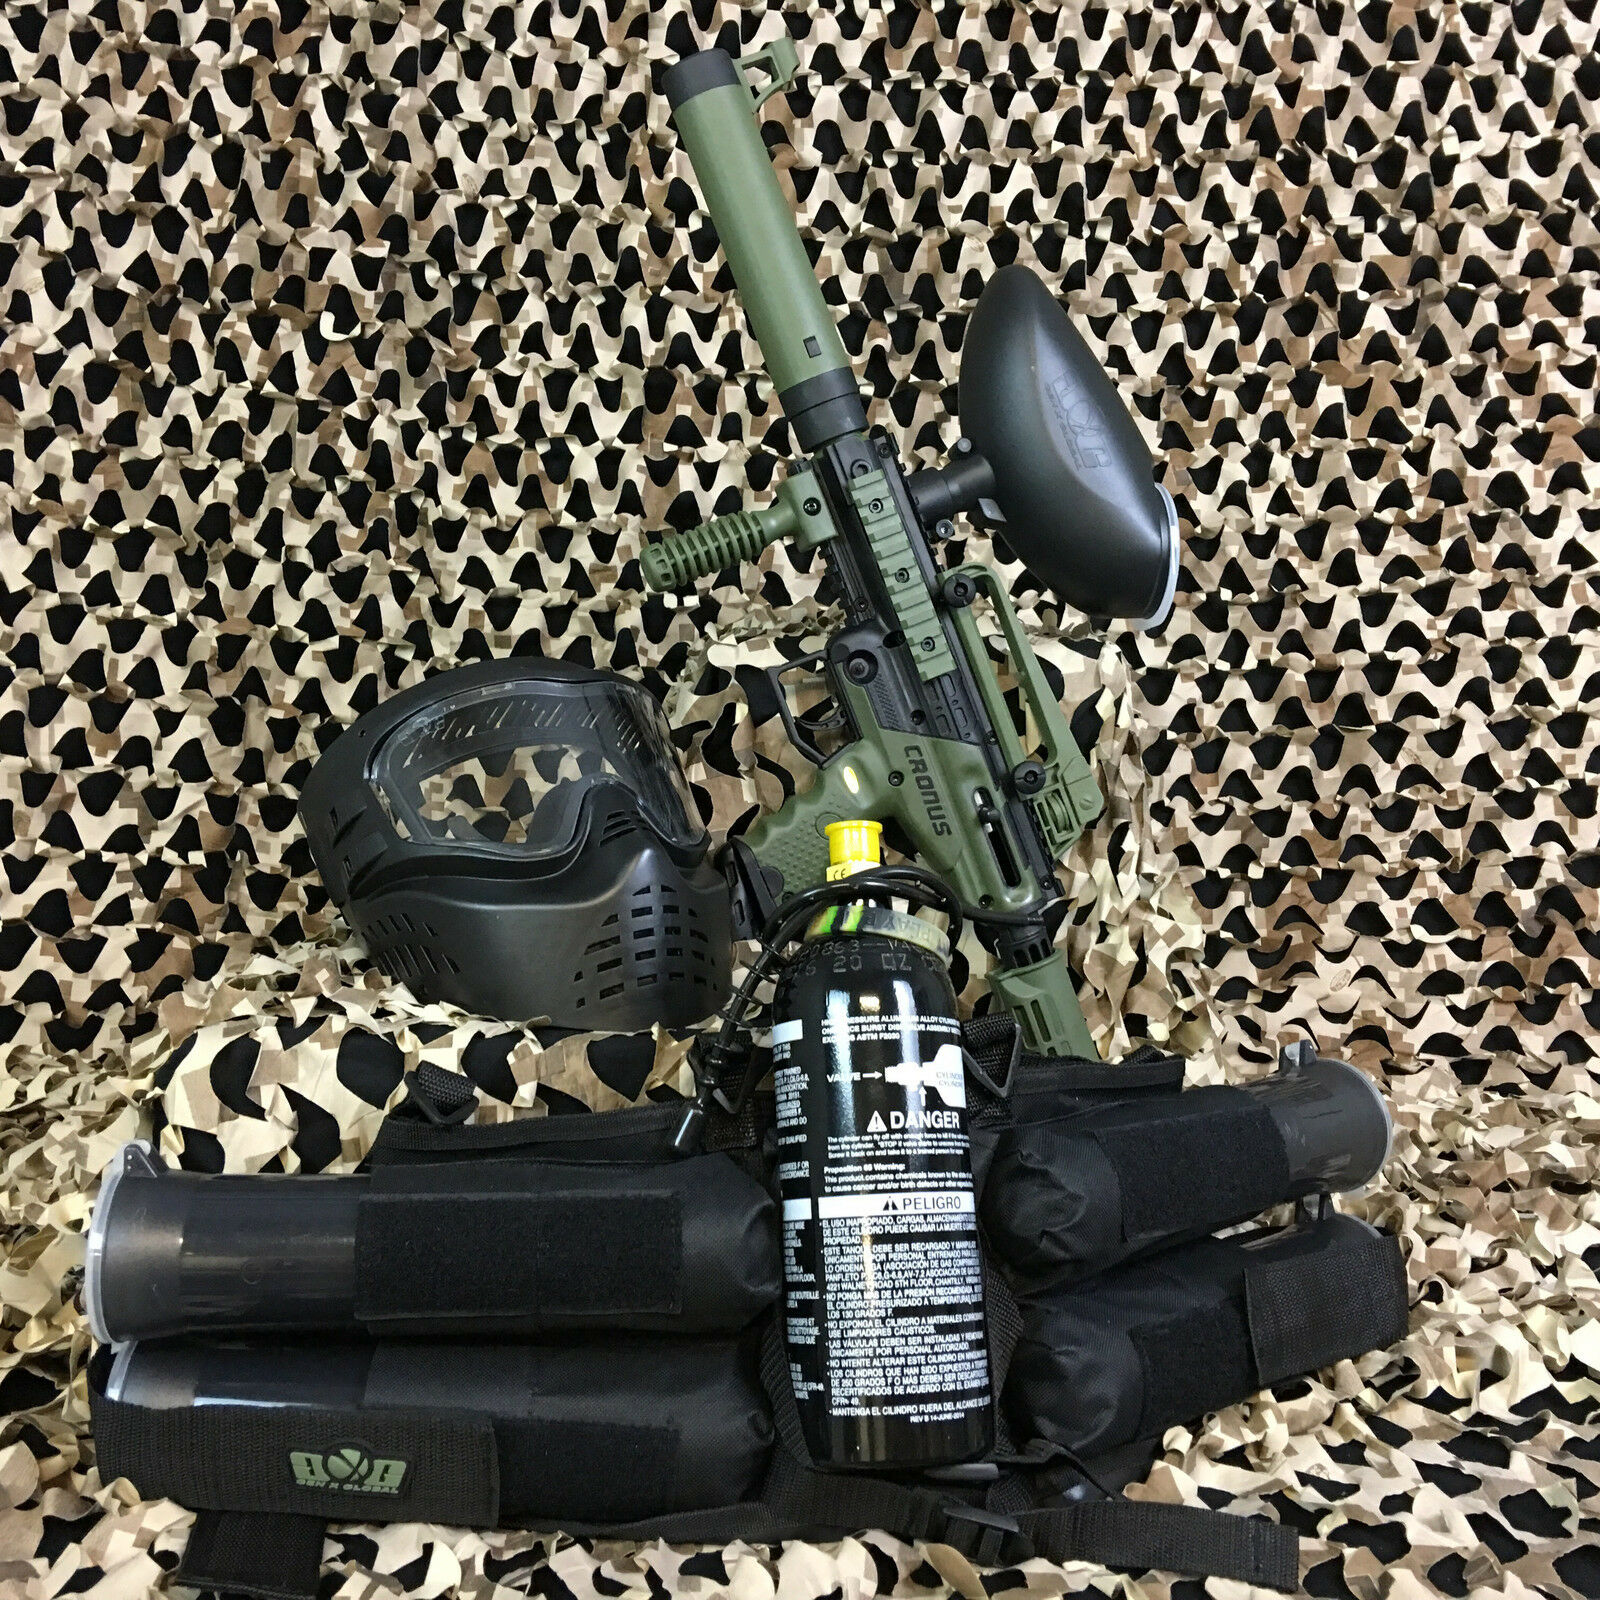 New Tippmann Cronus Tactical Epic Paintball Marker Gun Package Kit - Olive/black